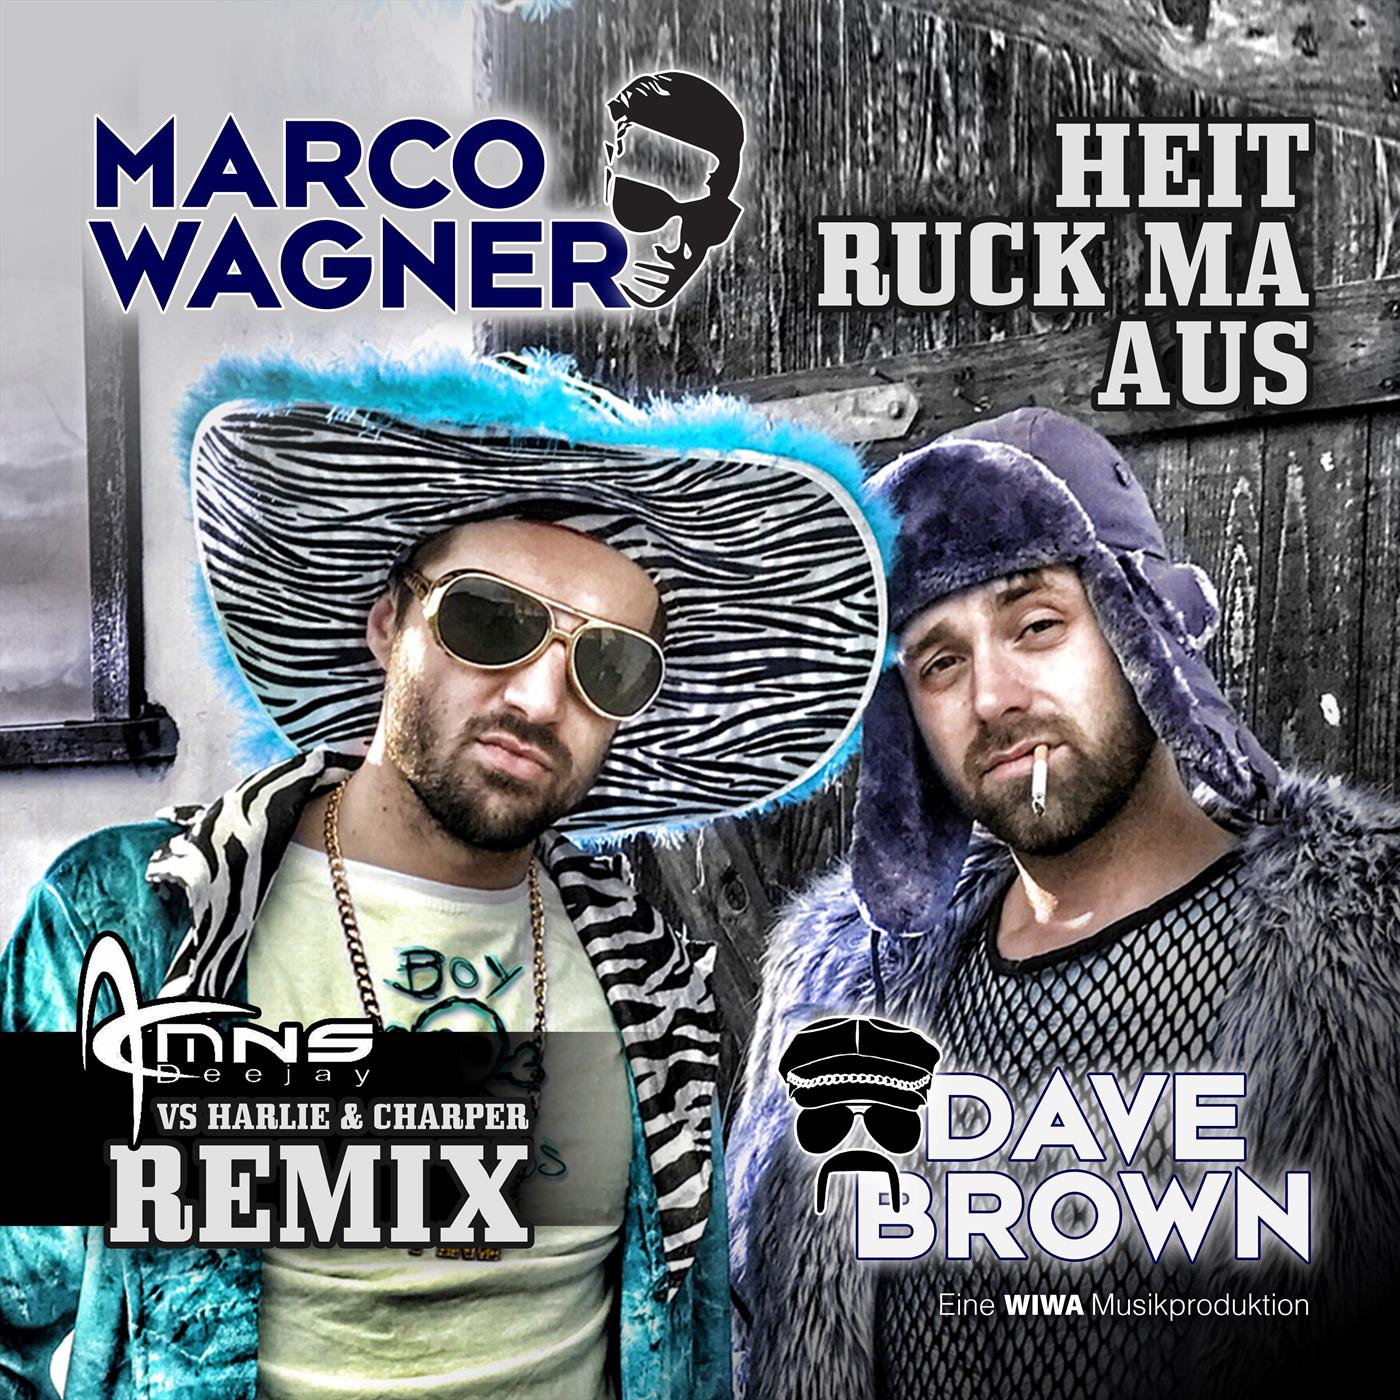 Heit Ruck Ma Aus (DJ MNS vs Harlie & Charper Remix)